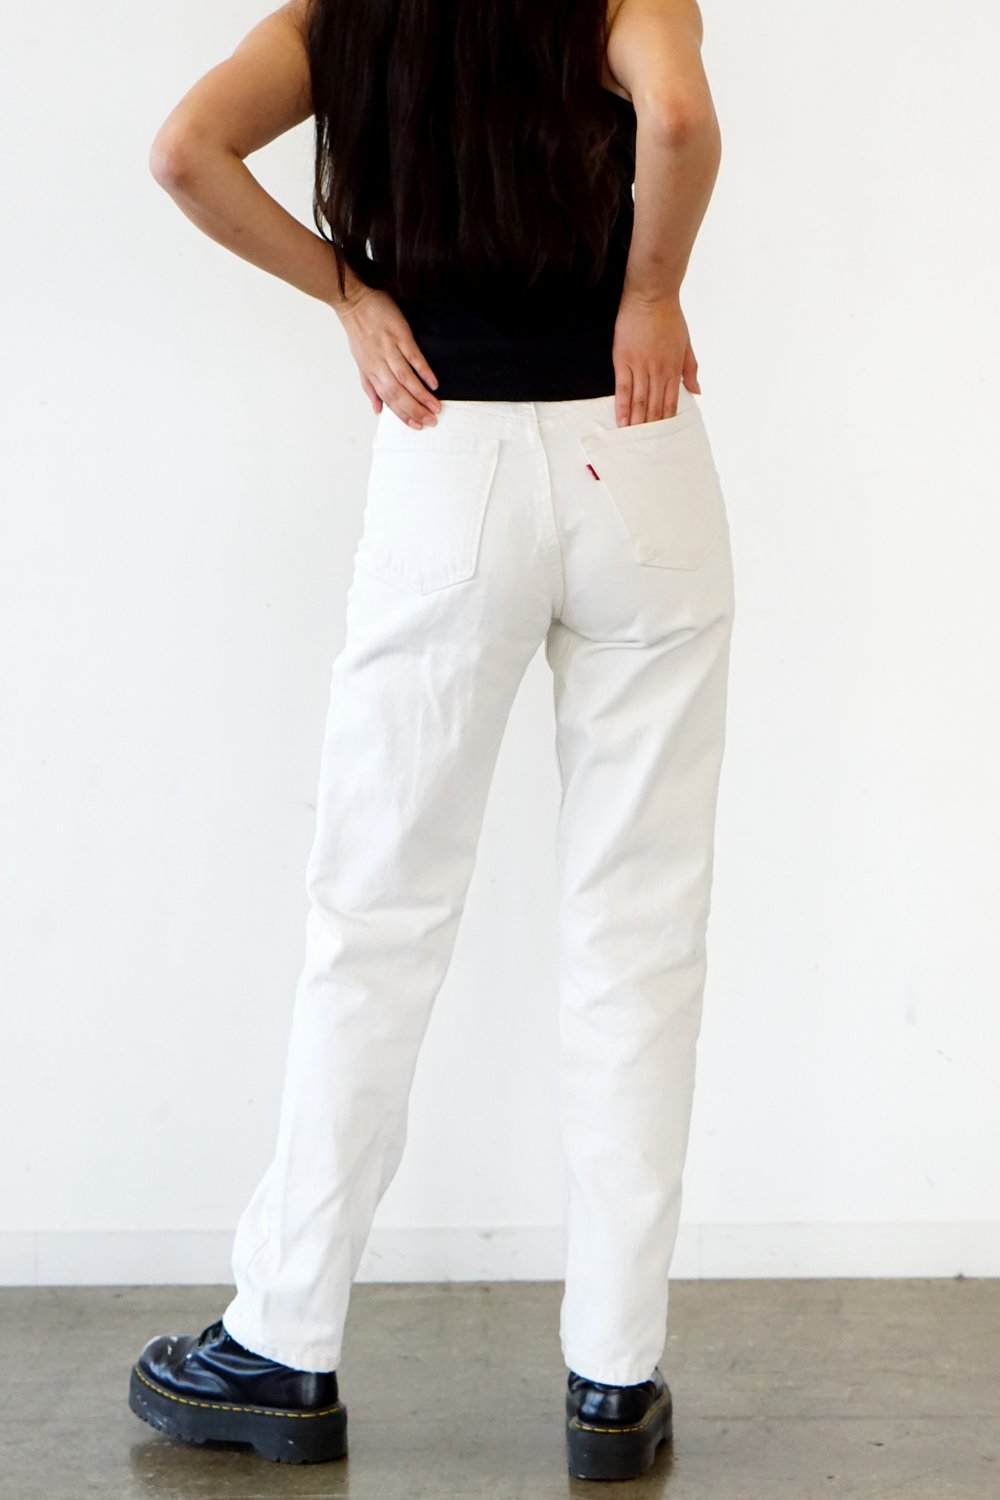 White Levi's 560 Denim Jeans SZ 25 — Valley Denim